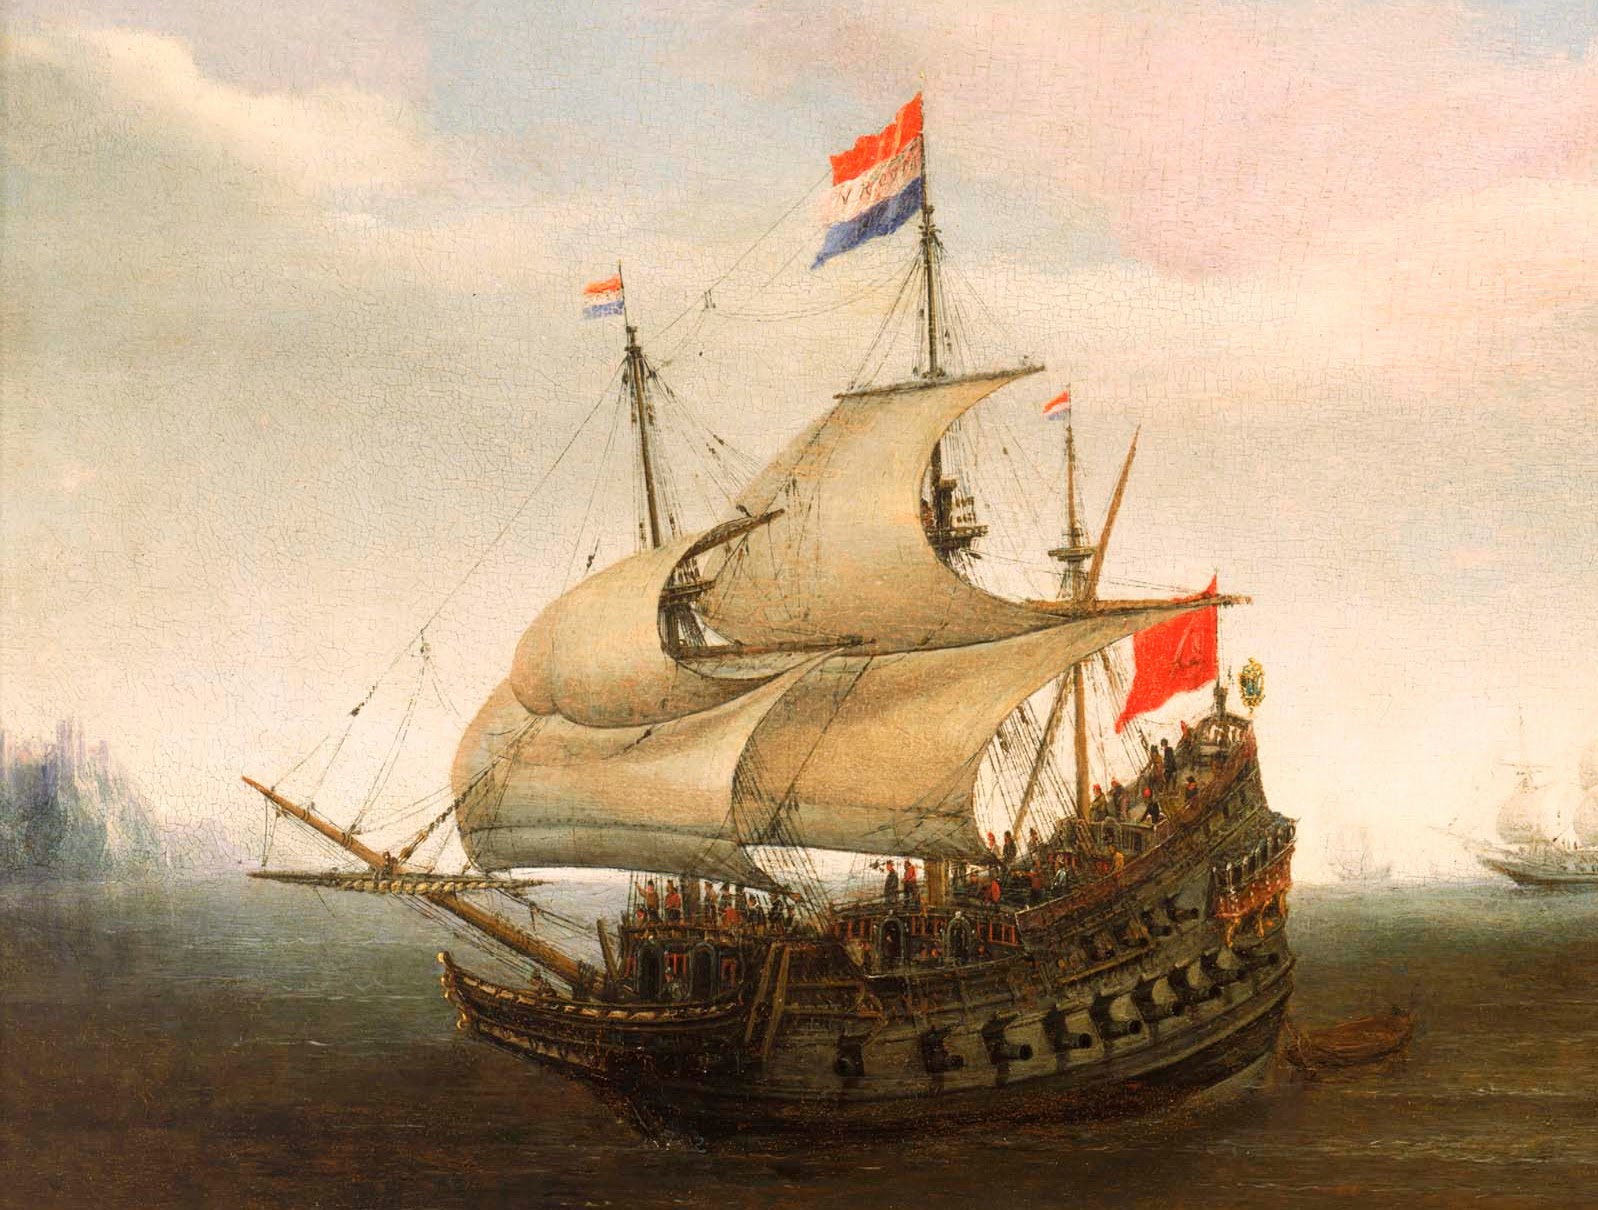 17th century Dutch ships